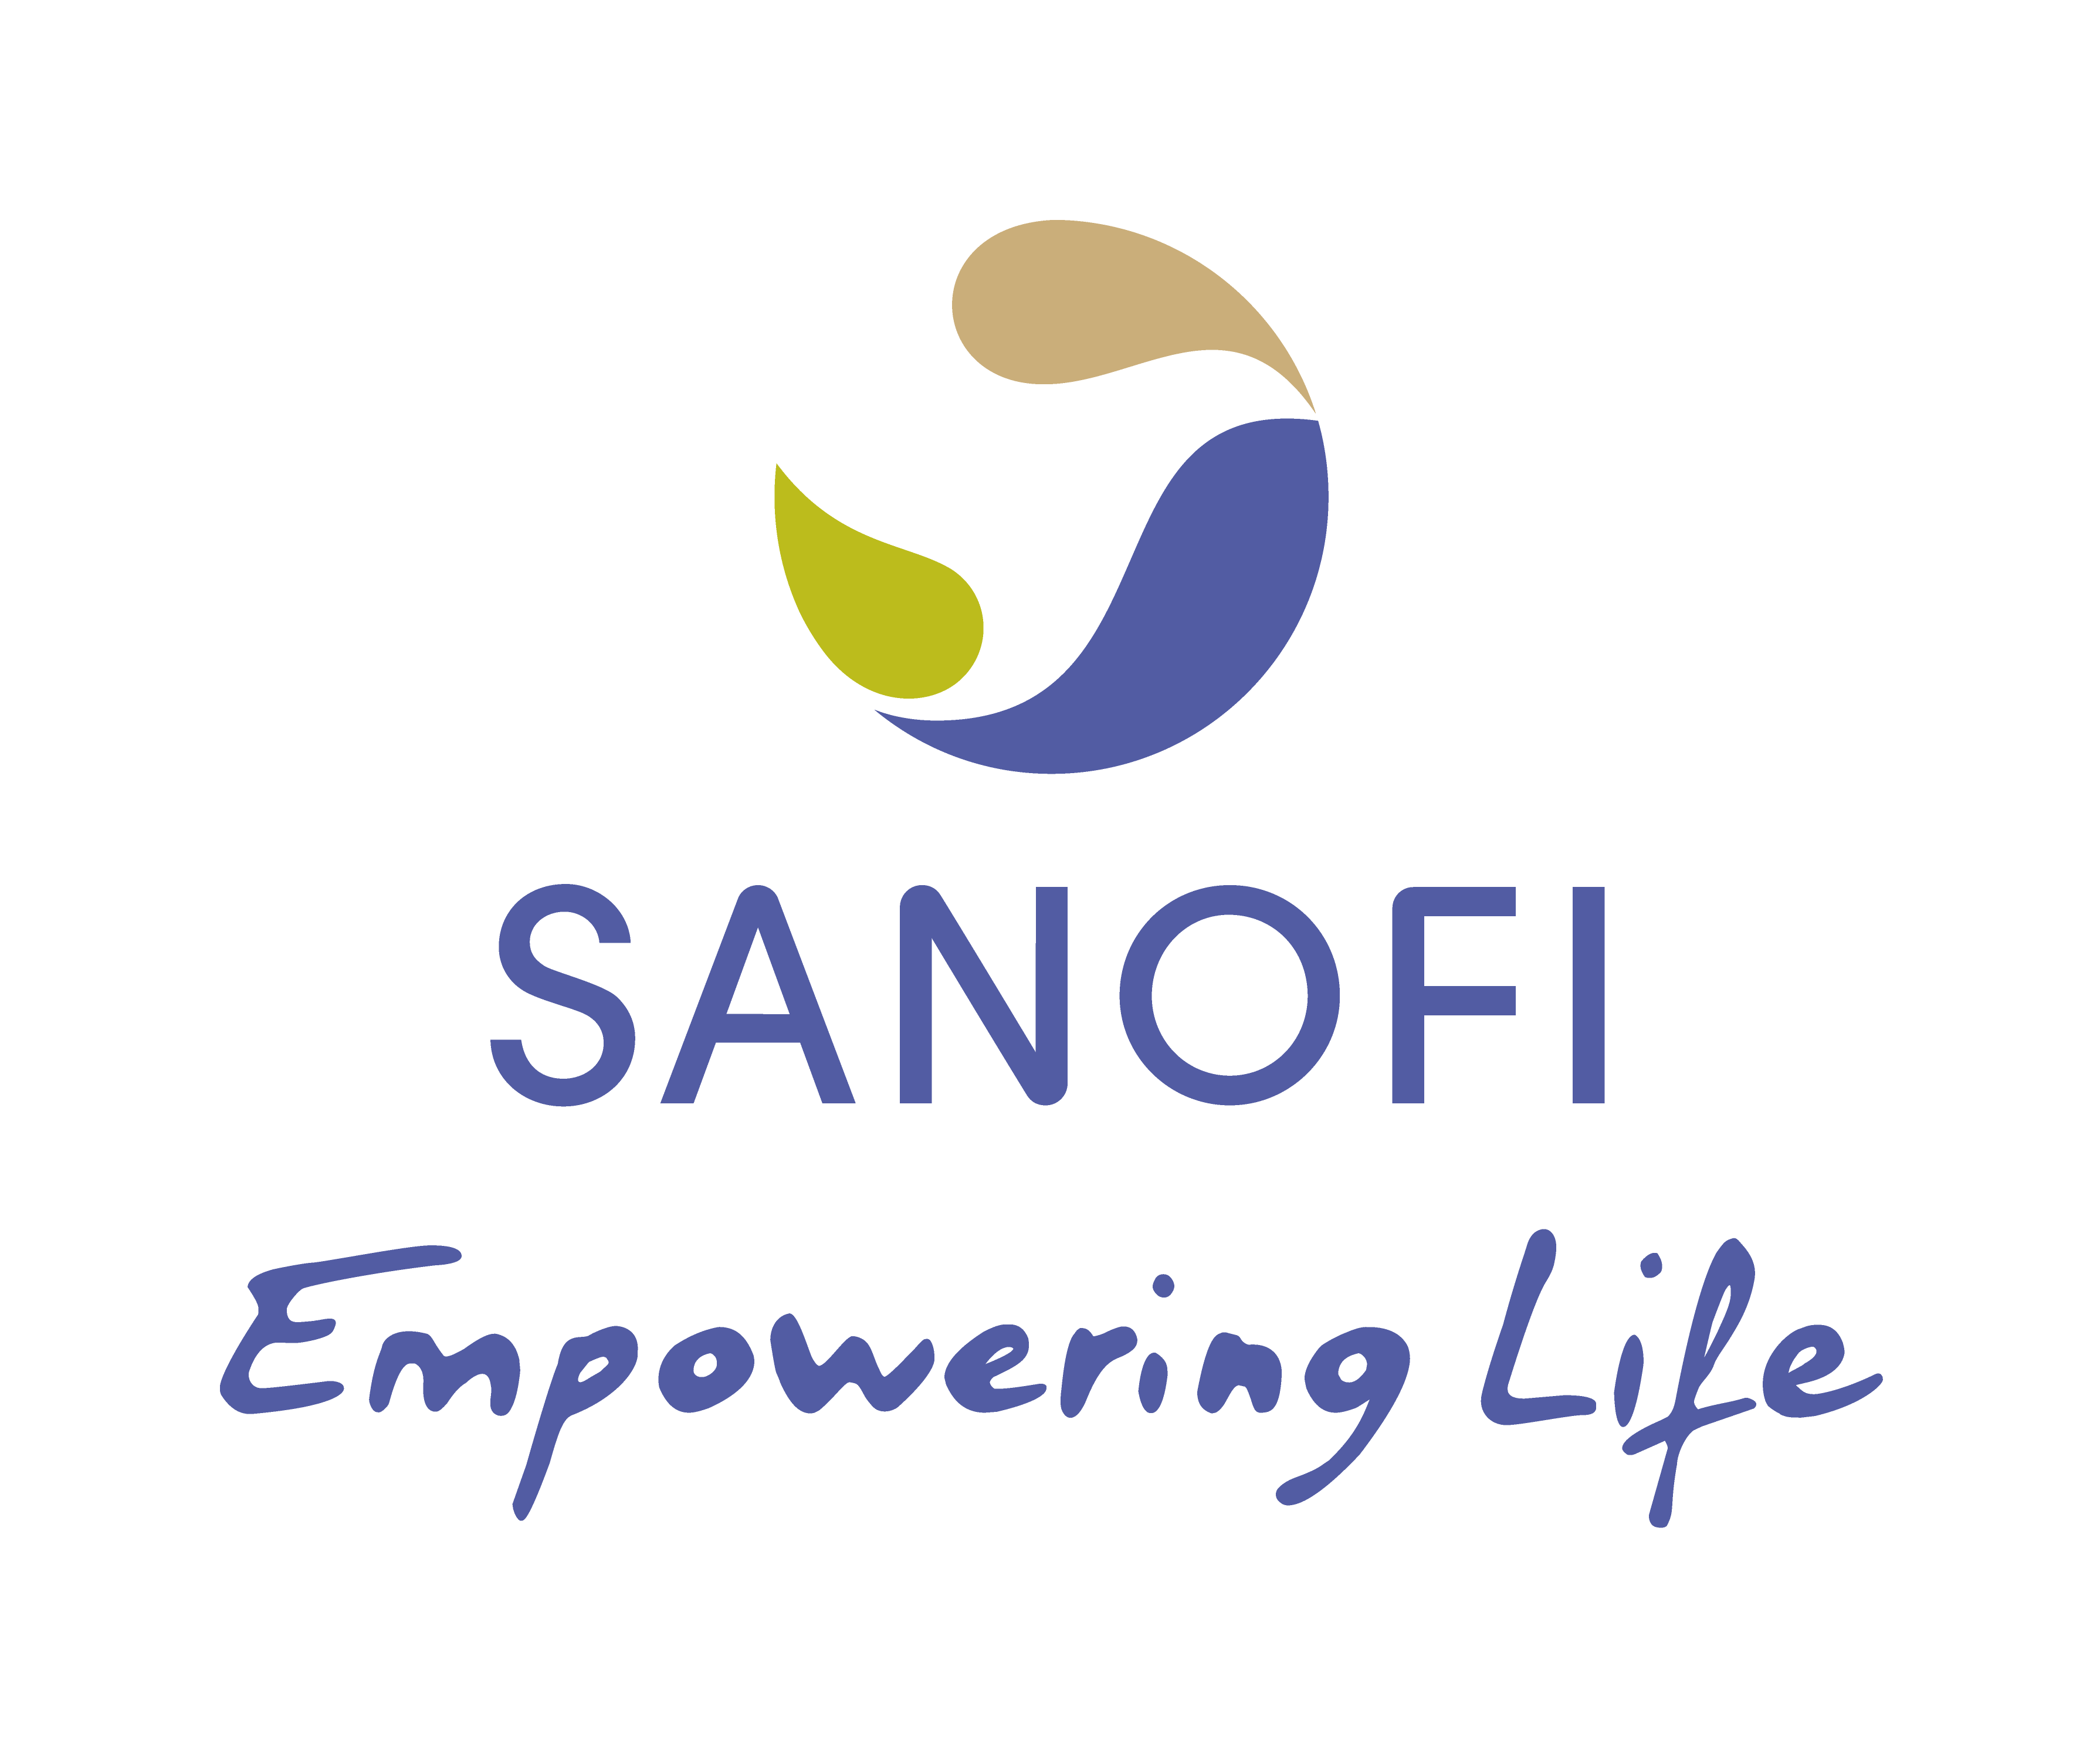 Sanofi Logo - Sanofi is about Empowering Life